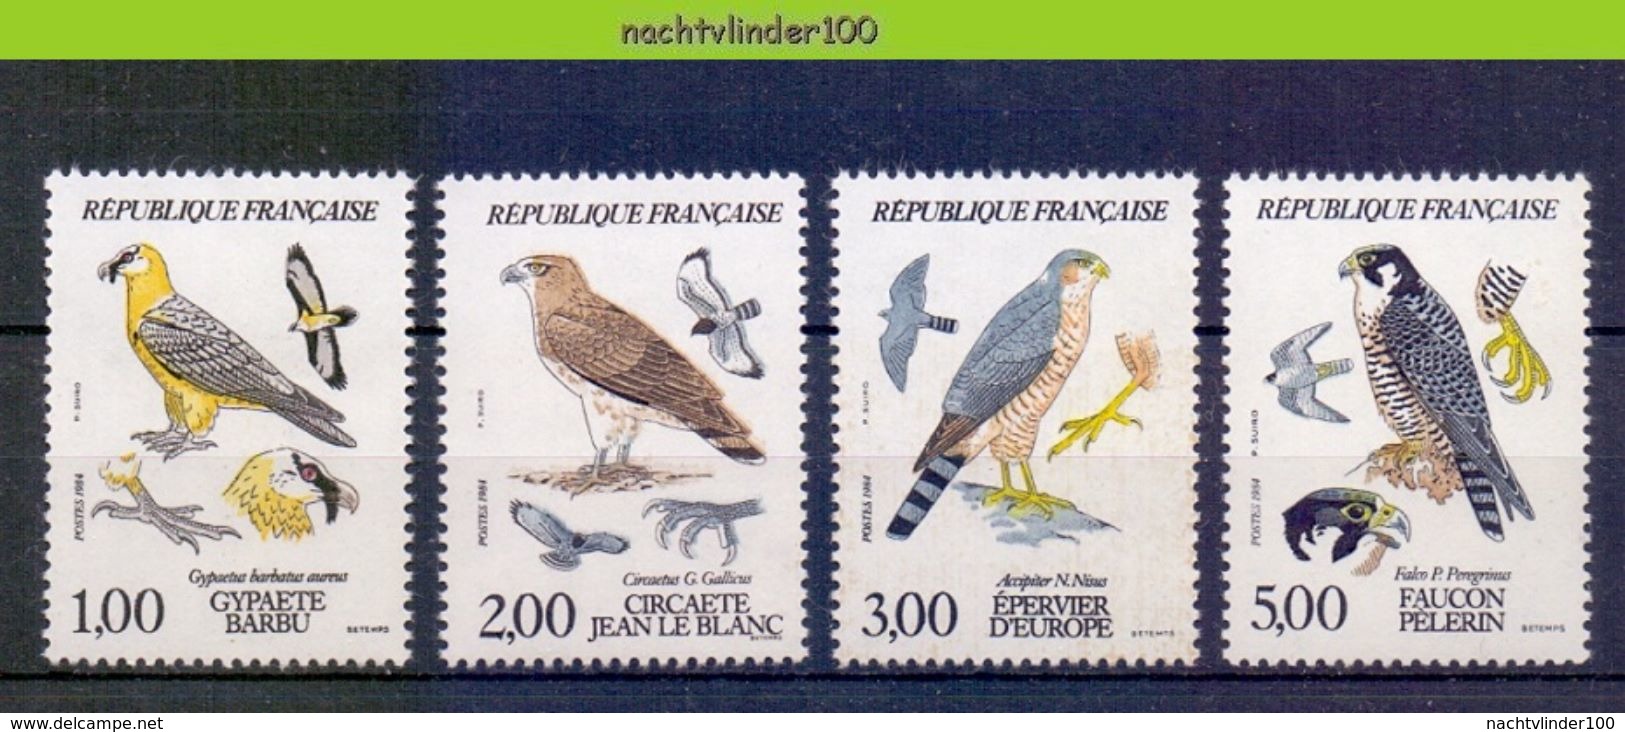 Mwe2582 FAUNA ROOFVOGELS BIRDS OF PREY GREIFVÖGEL RAUBVÖGEL AVES OISEAUX FRANCE 1984 PF/MNH - Arends & Roofvogels